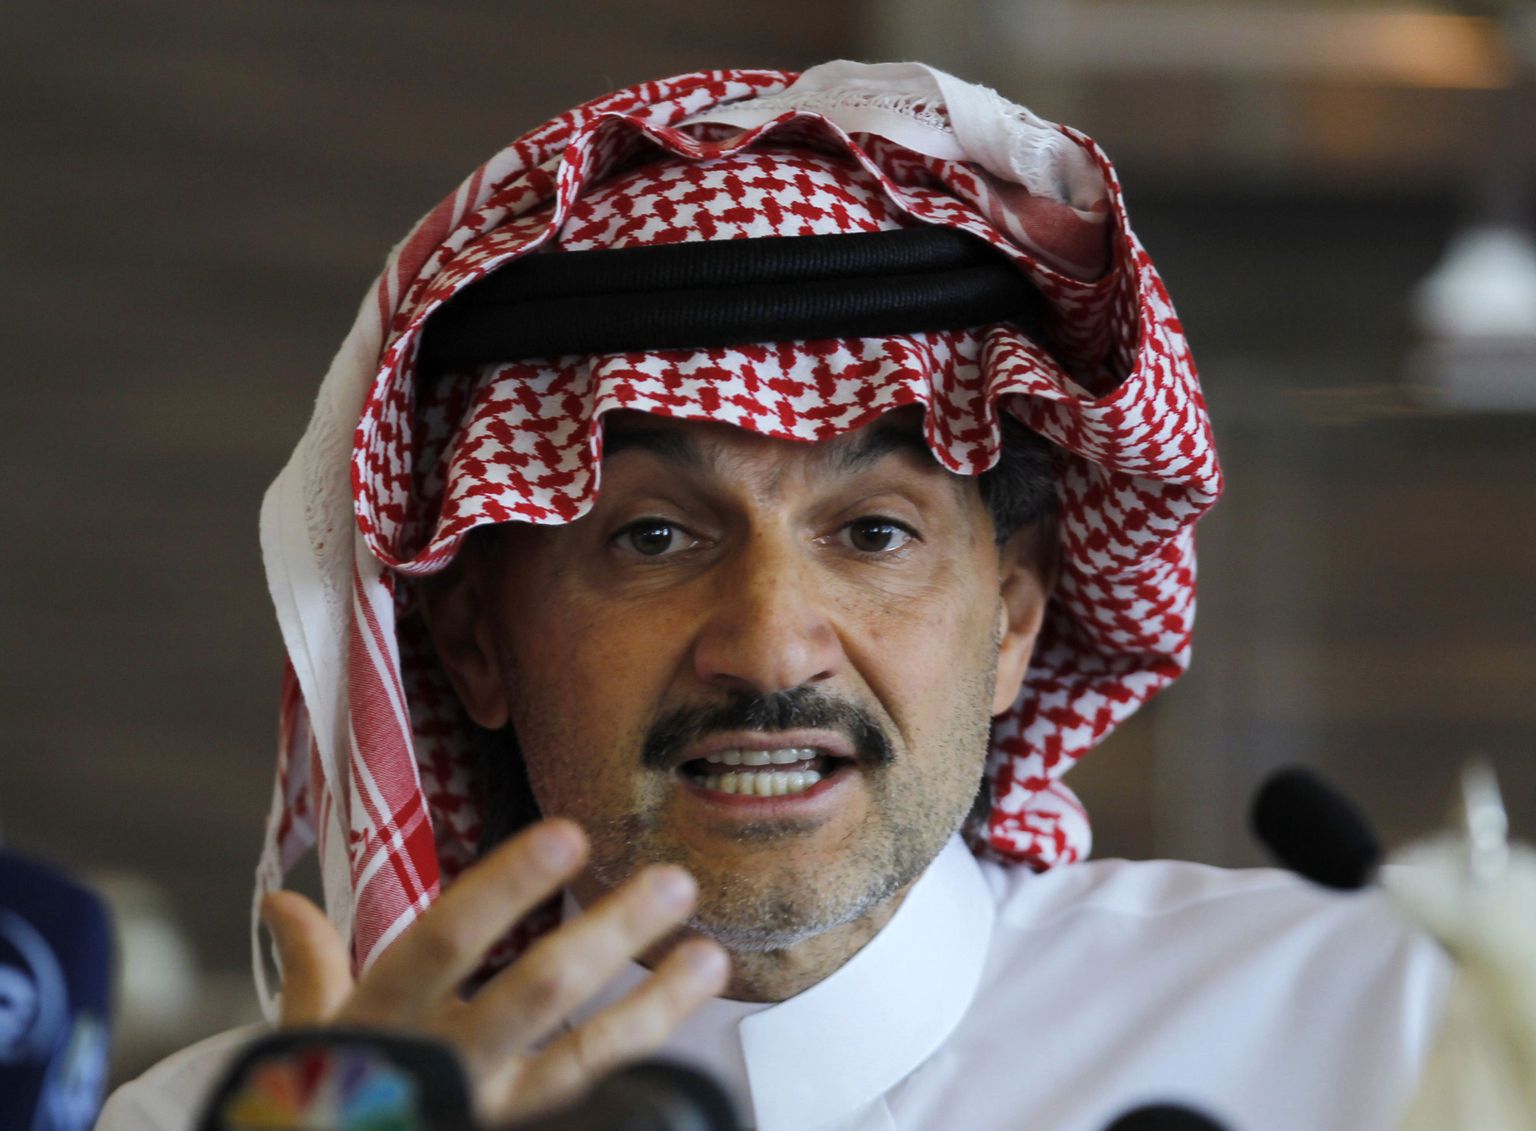 Saudi Araabia prints Alwaleed bin Talal